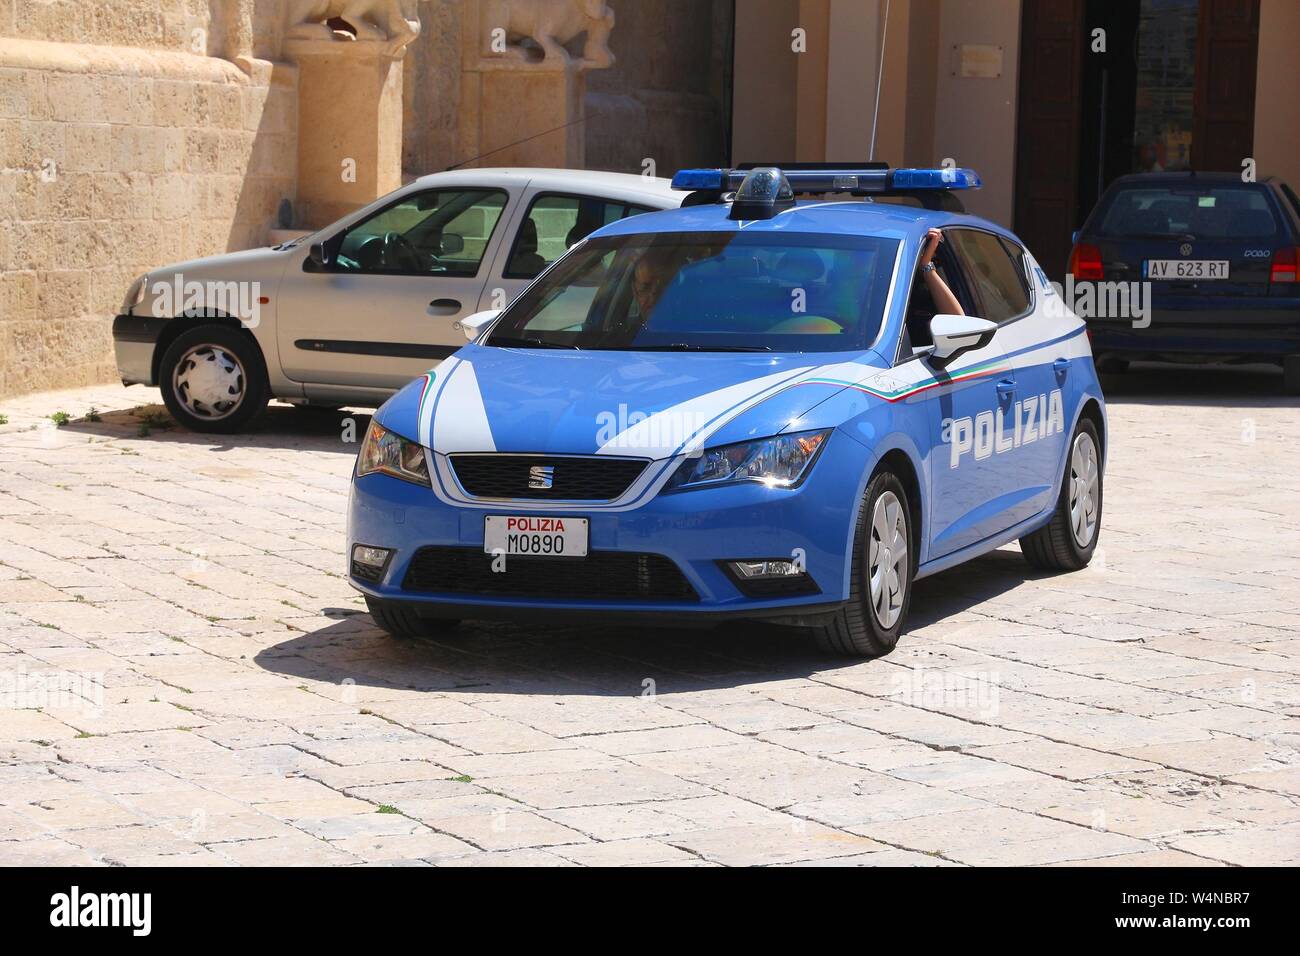 MATERA, ITALY - JUNE 4, 2017: Police car in Matera, Italy. The car is Seat Ibiza. Stock Photo